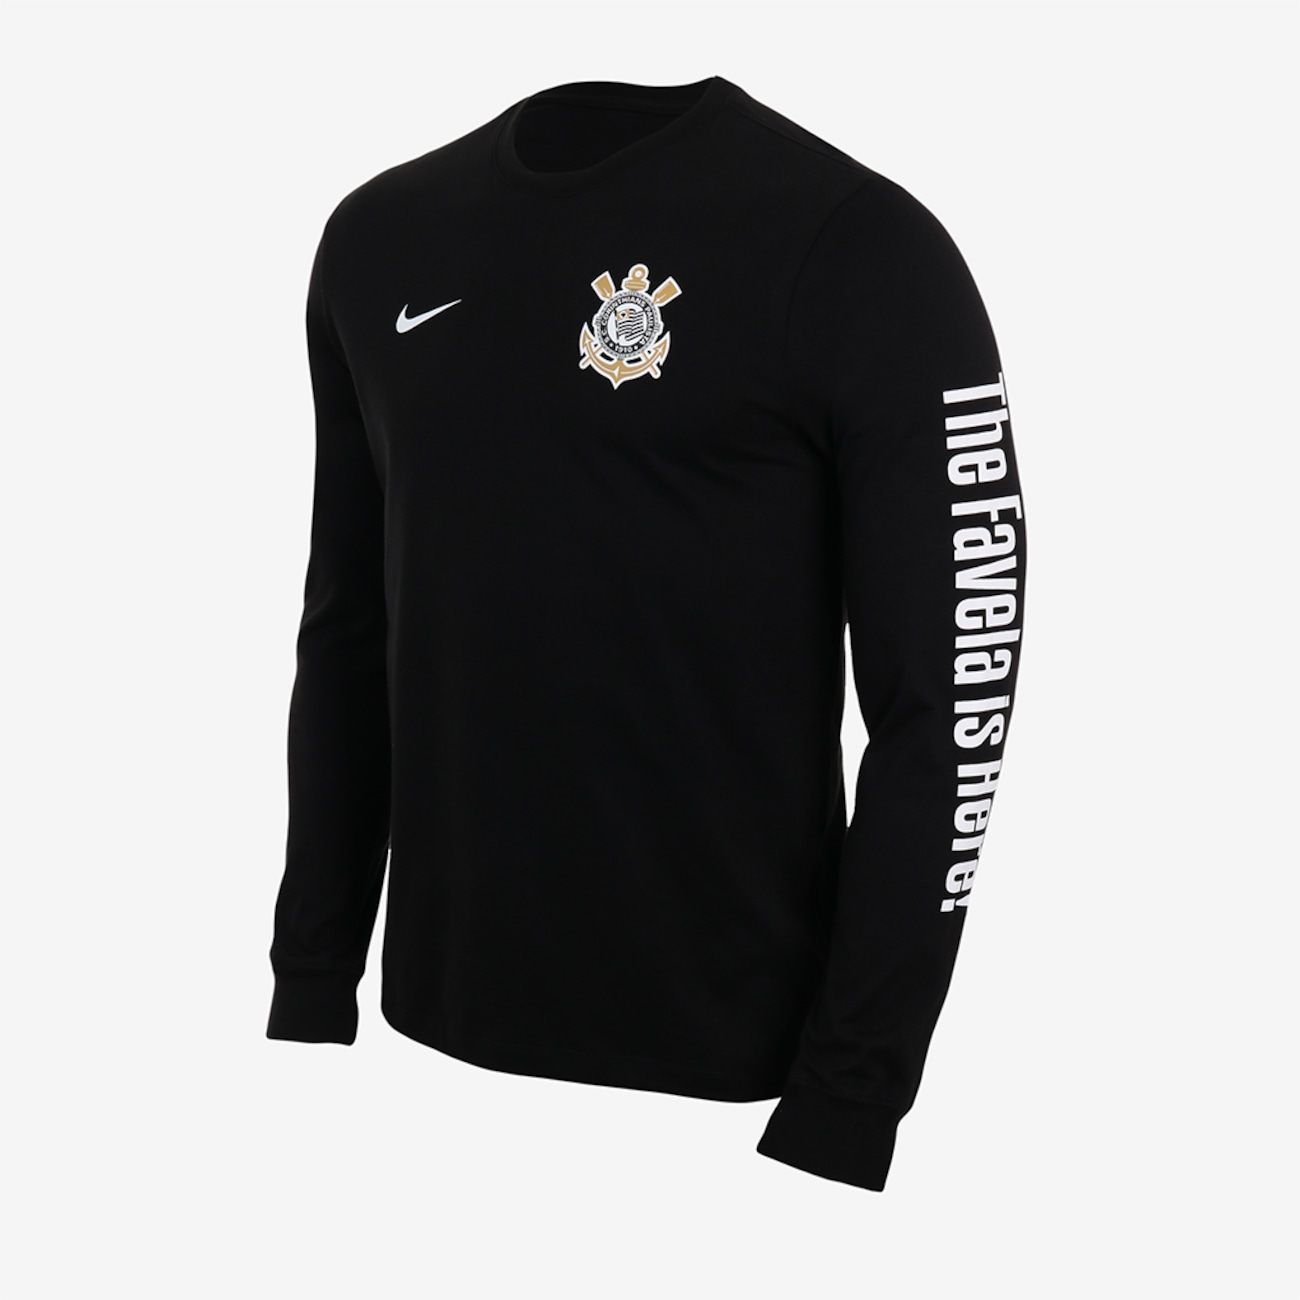 Camiseta Nike Corinthians Masculina  - Foto 1